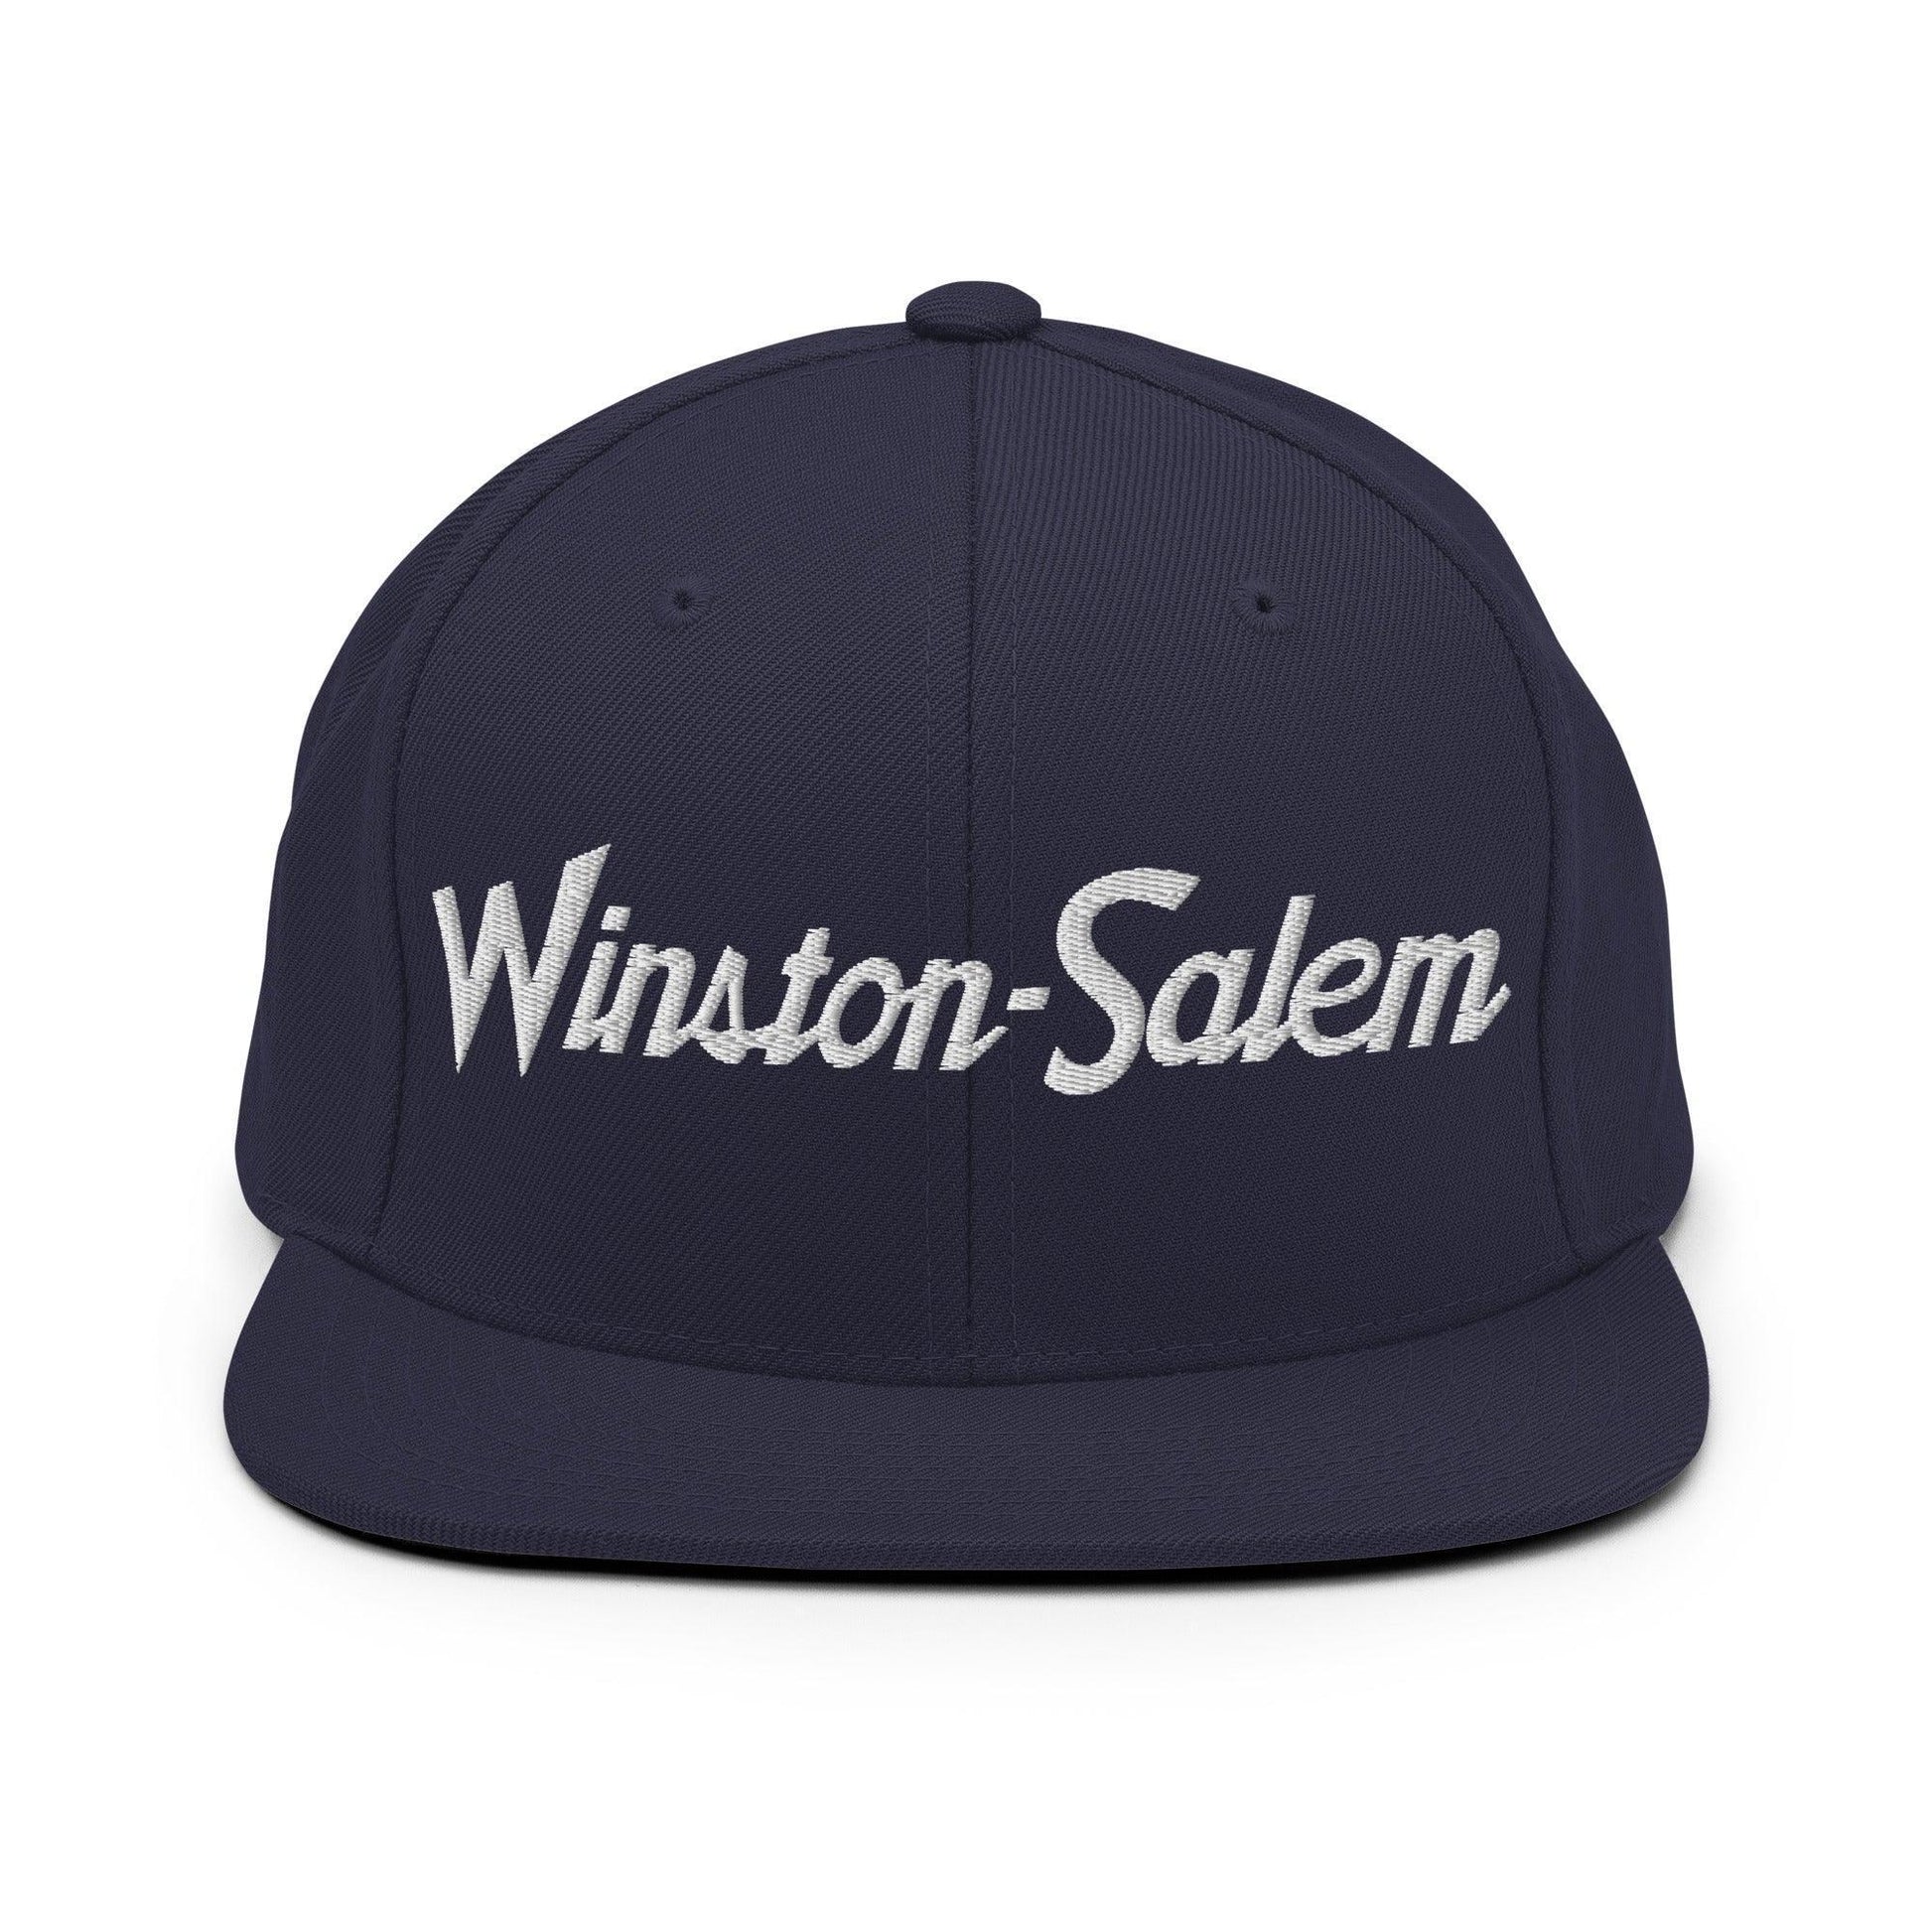 Winston-Salem Script Snapback Hat Navy